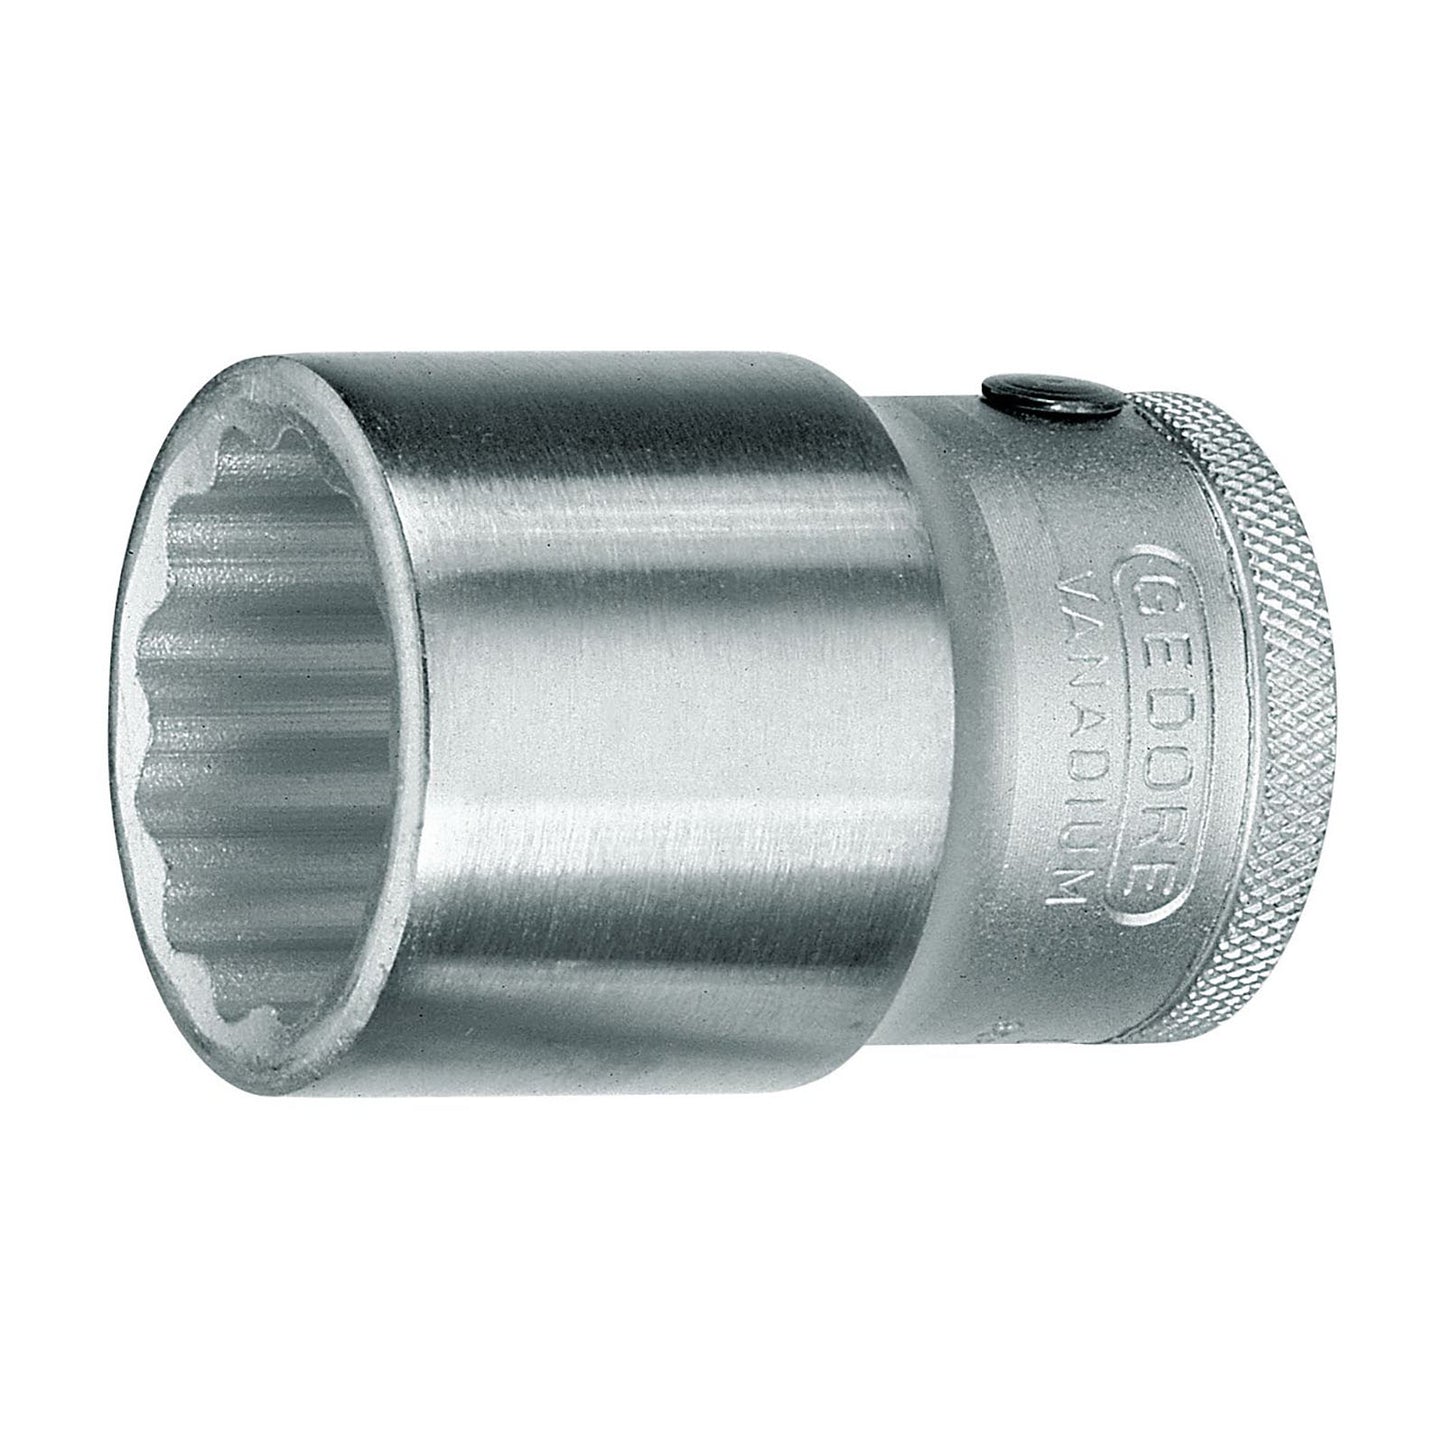 GEDORE D 32 30 - Vaso Unit Drive 3/4", 30 mm (6272670)